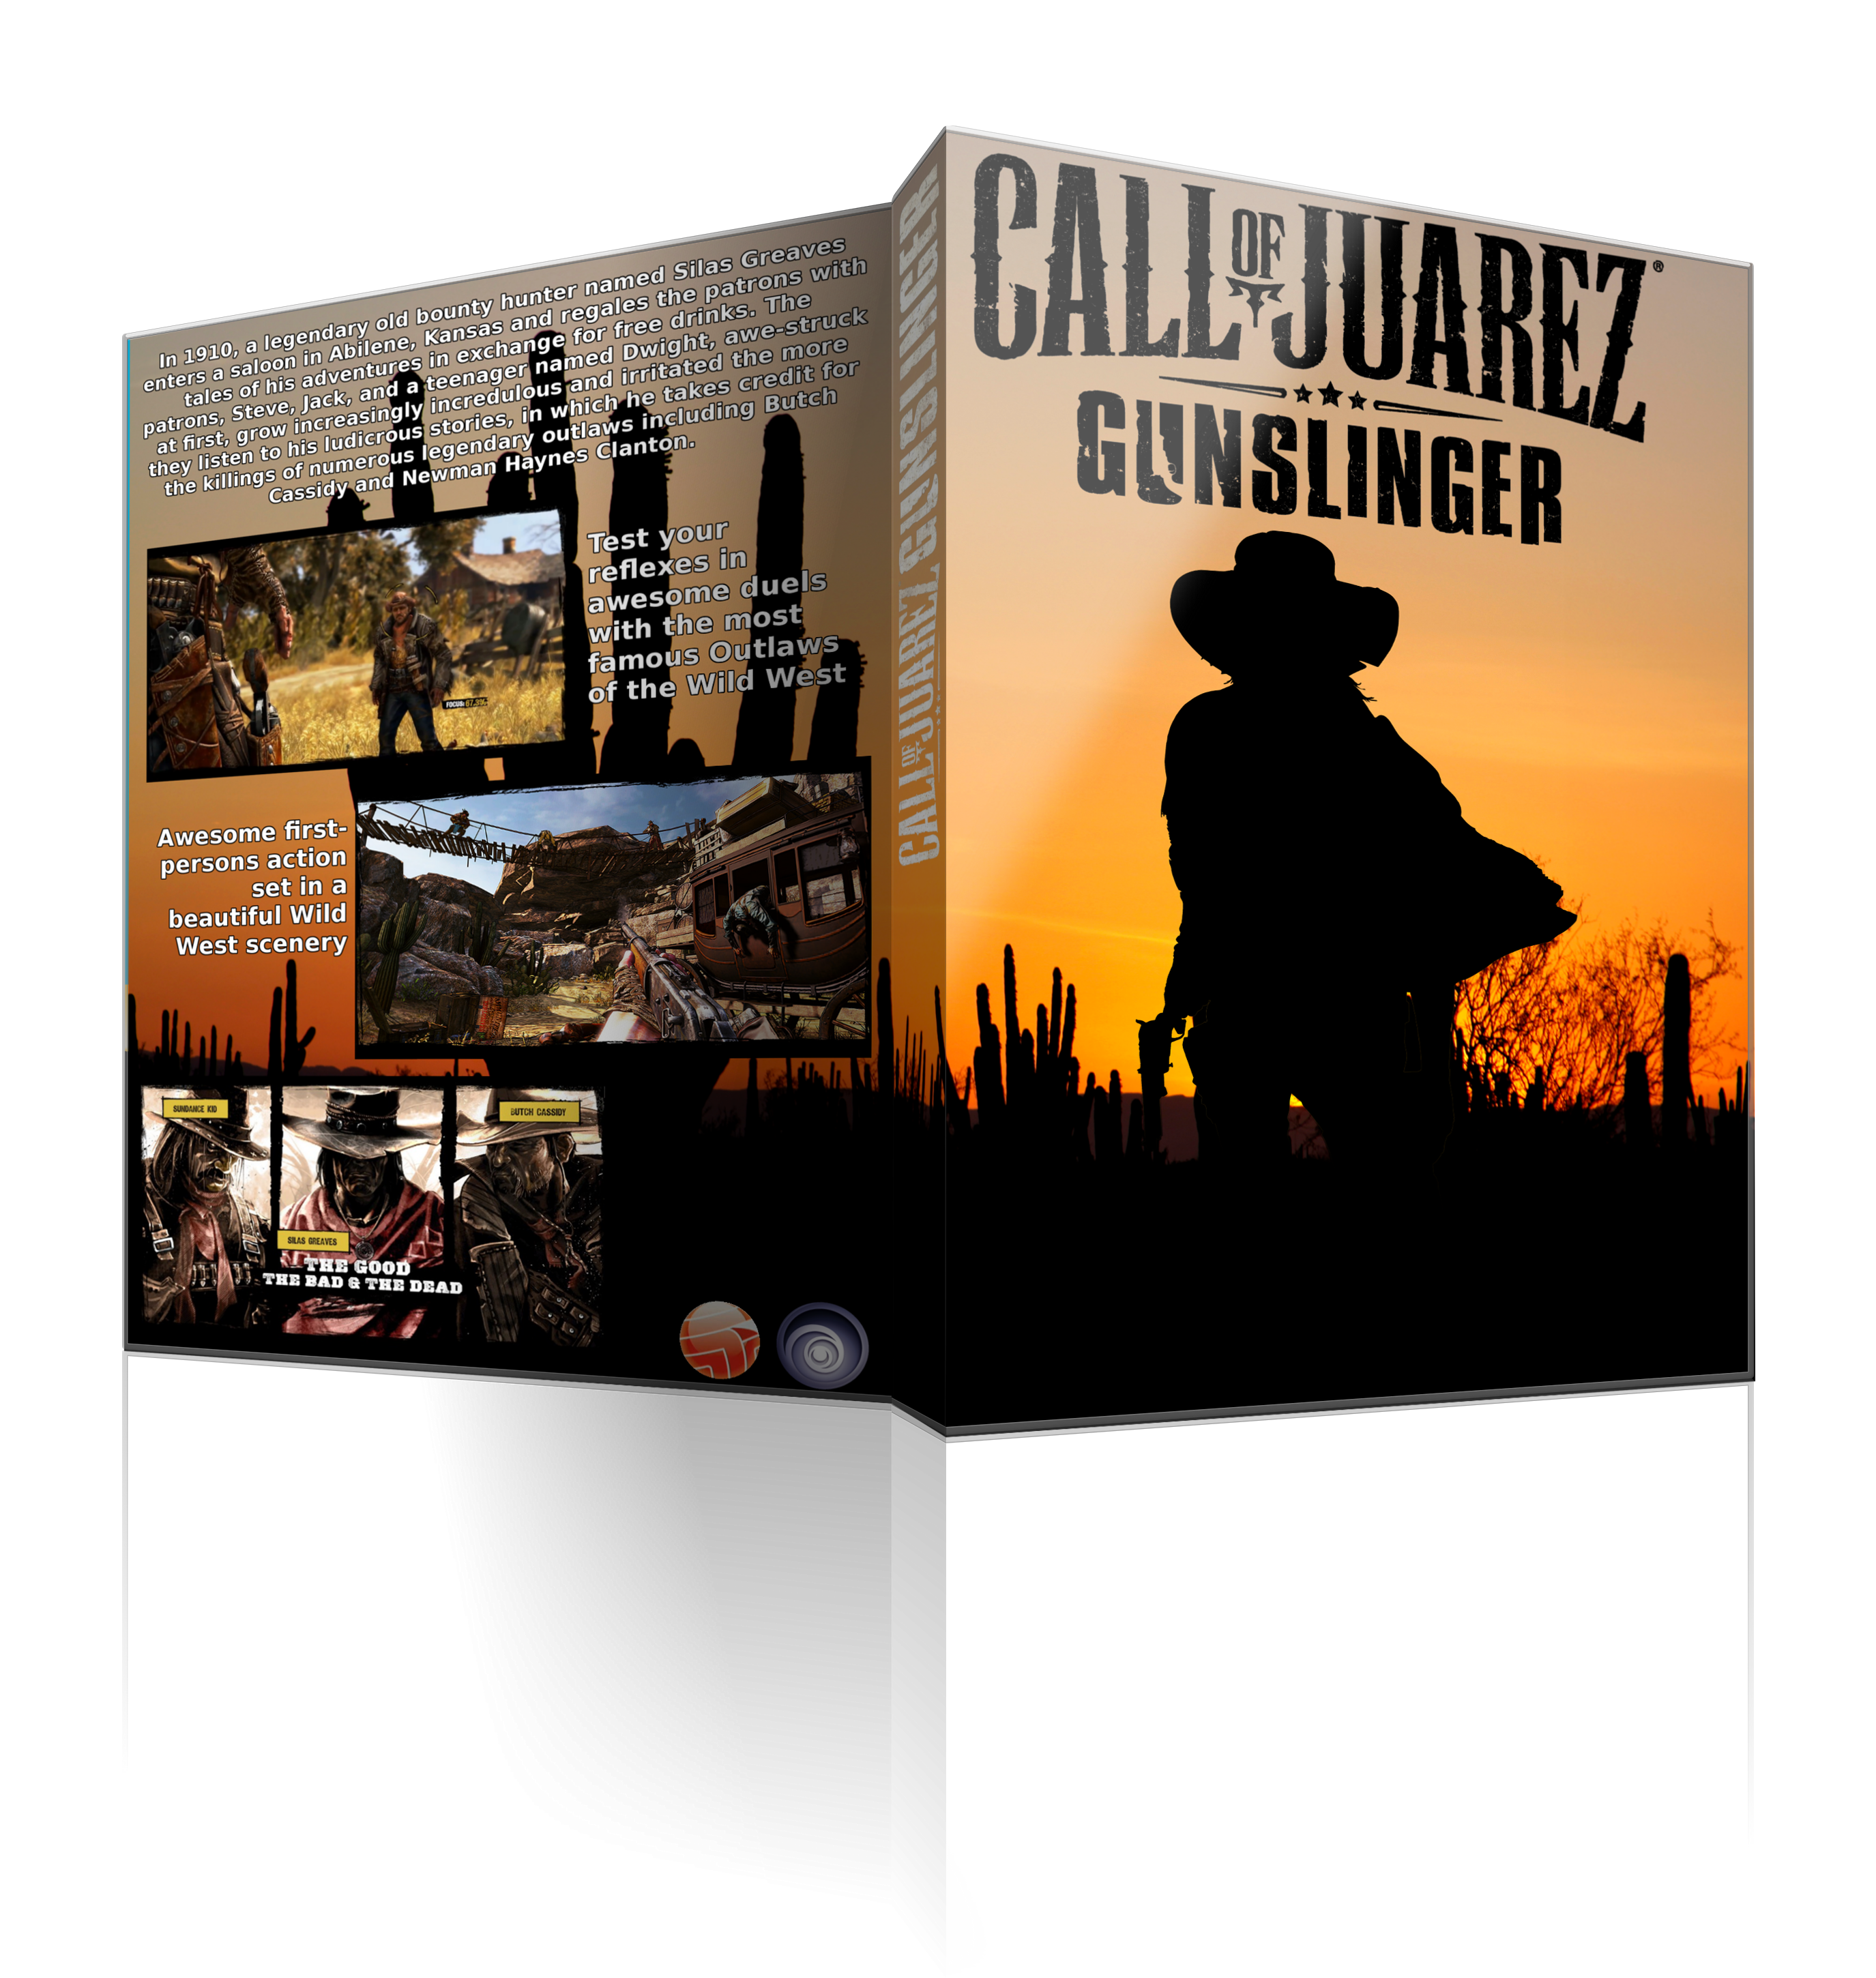 Call of Juarez: Gunslinger box cover